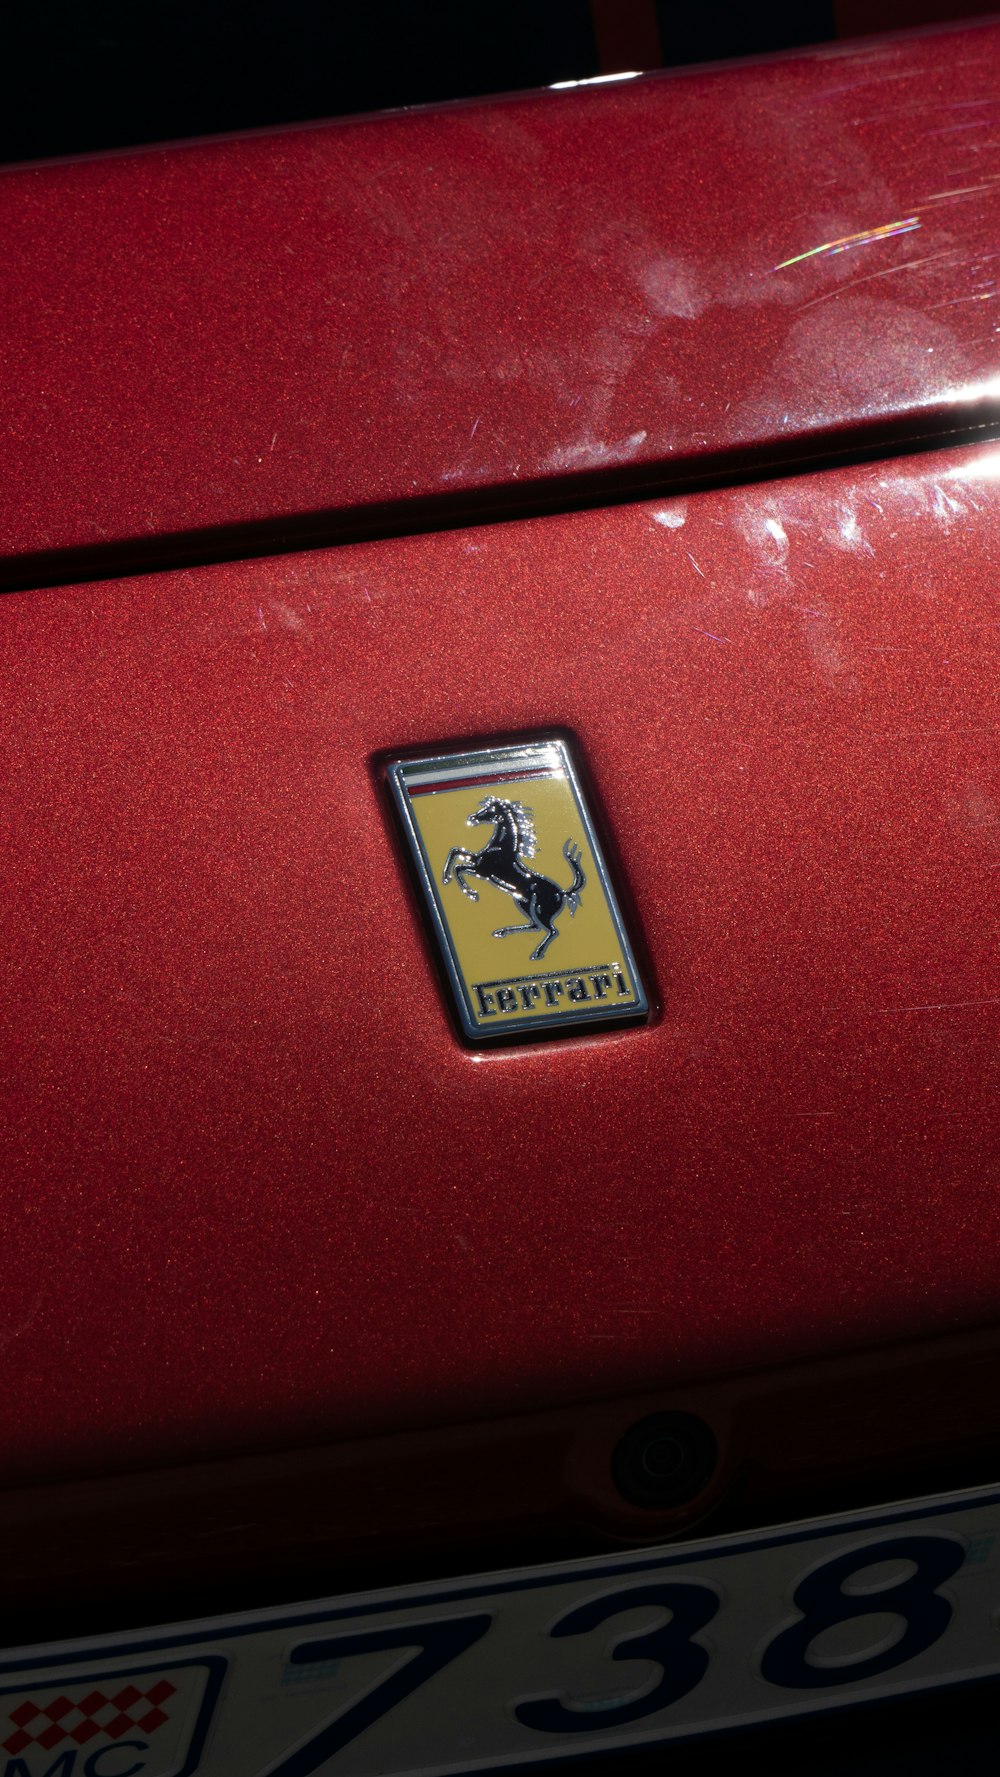 a red car with a ferrari emblem on it